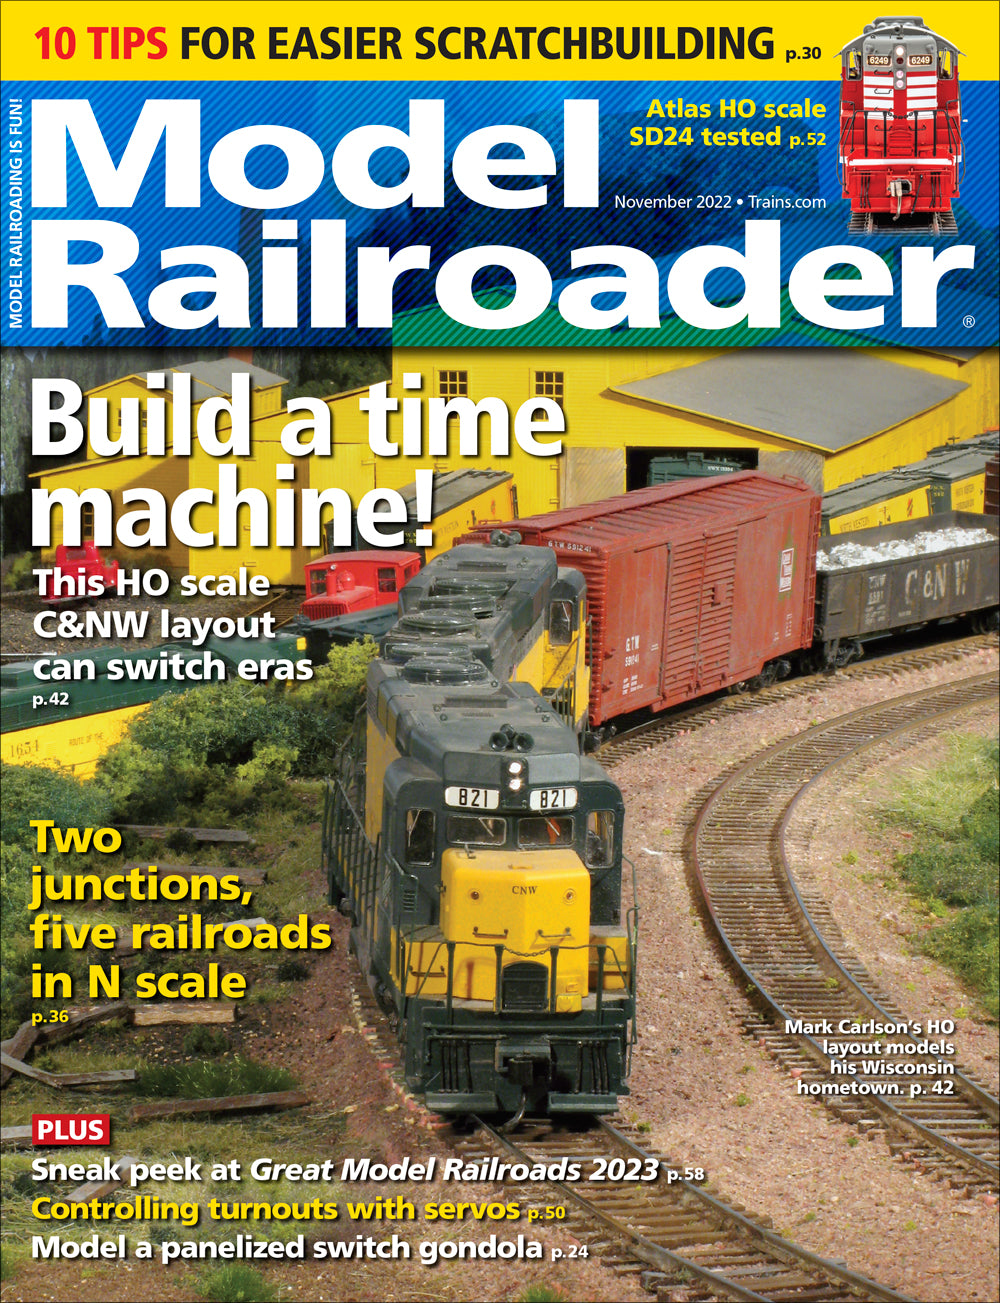 Model Railroader - Magazine - Vol. 89 - Issue 11 - Nov 2022